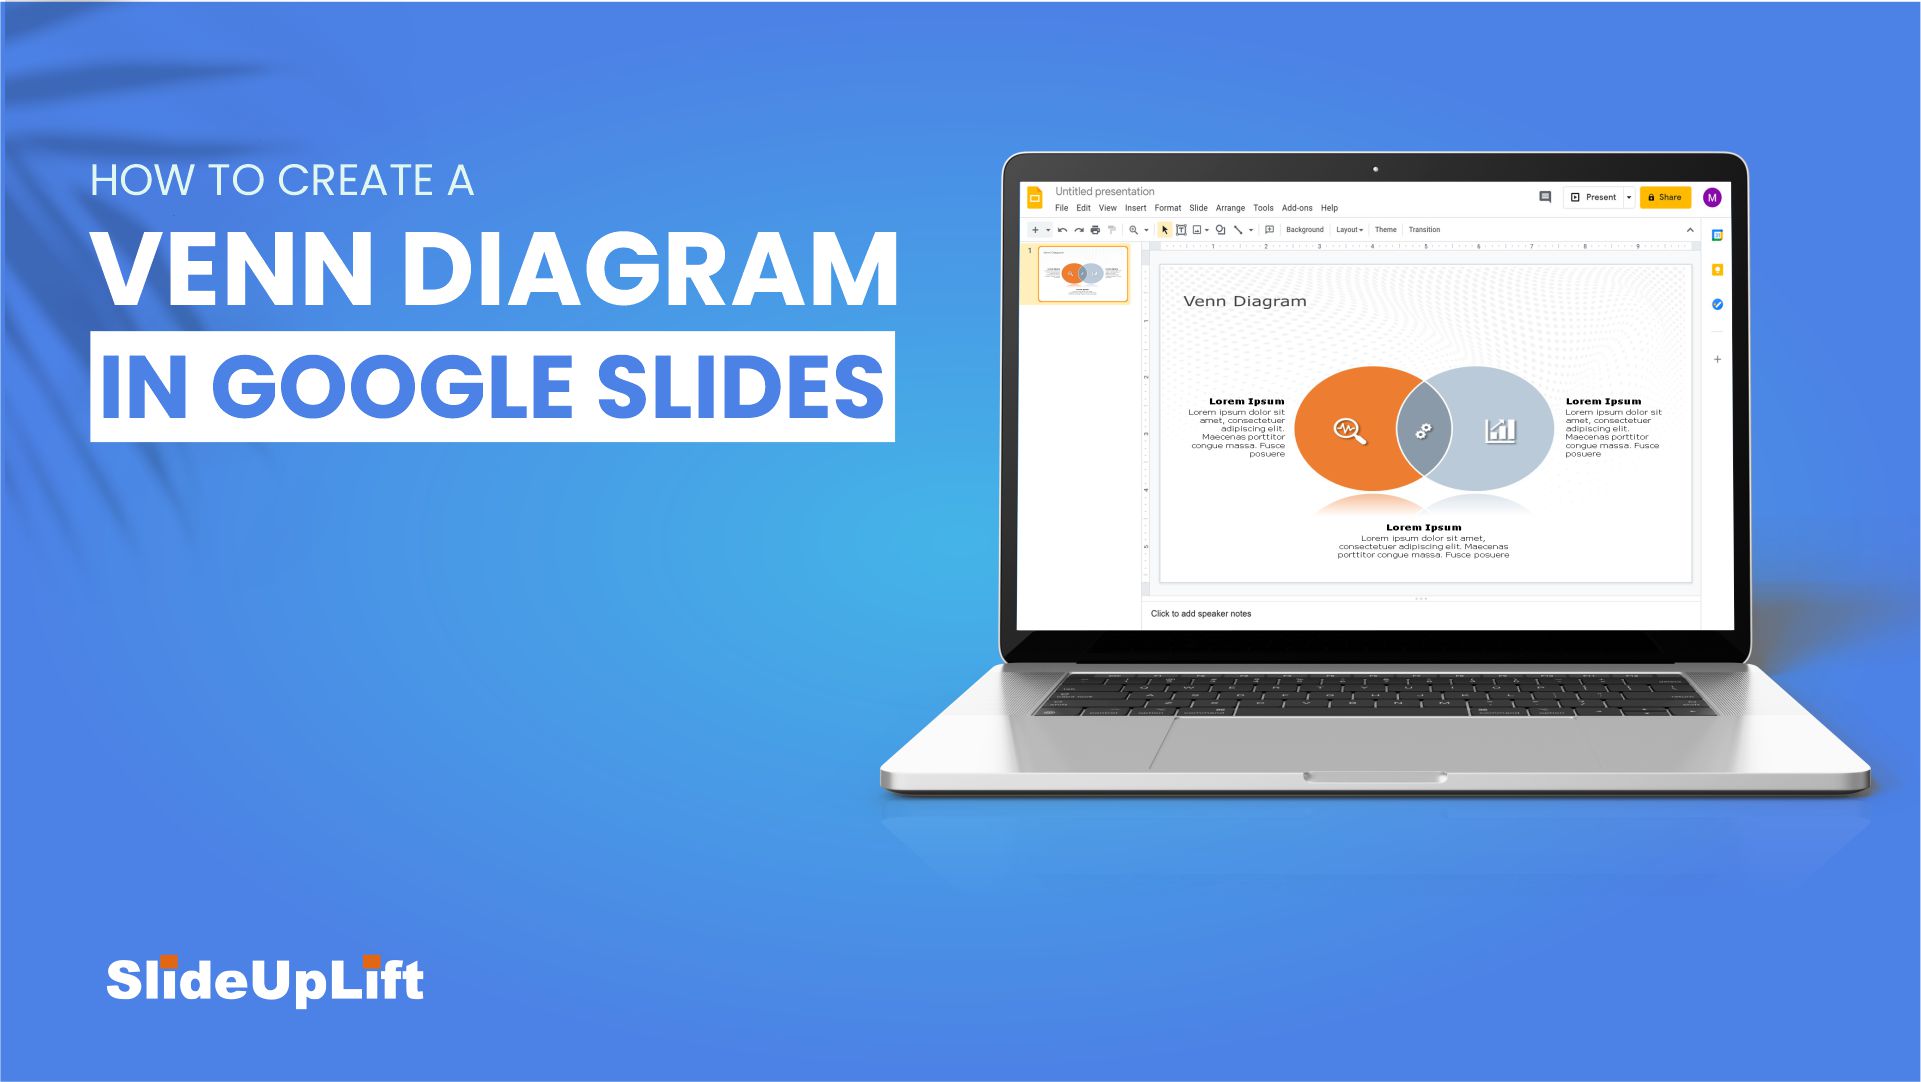 How To Create A Venn Diagram In Google slides?